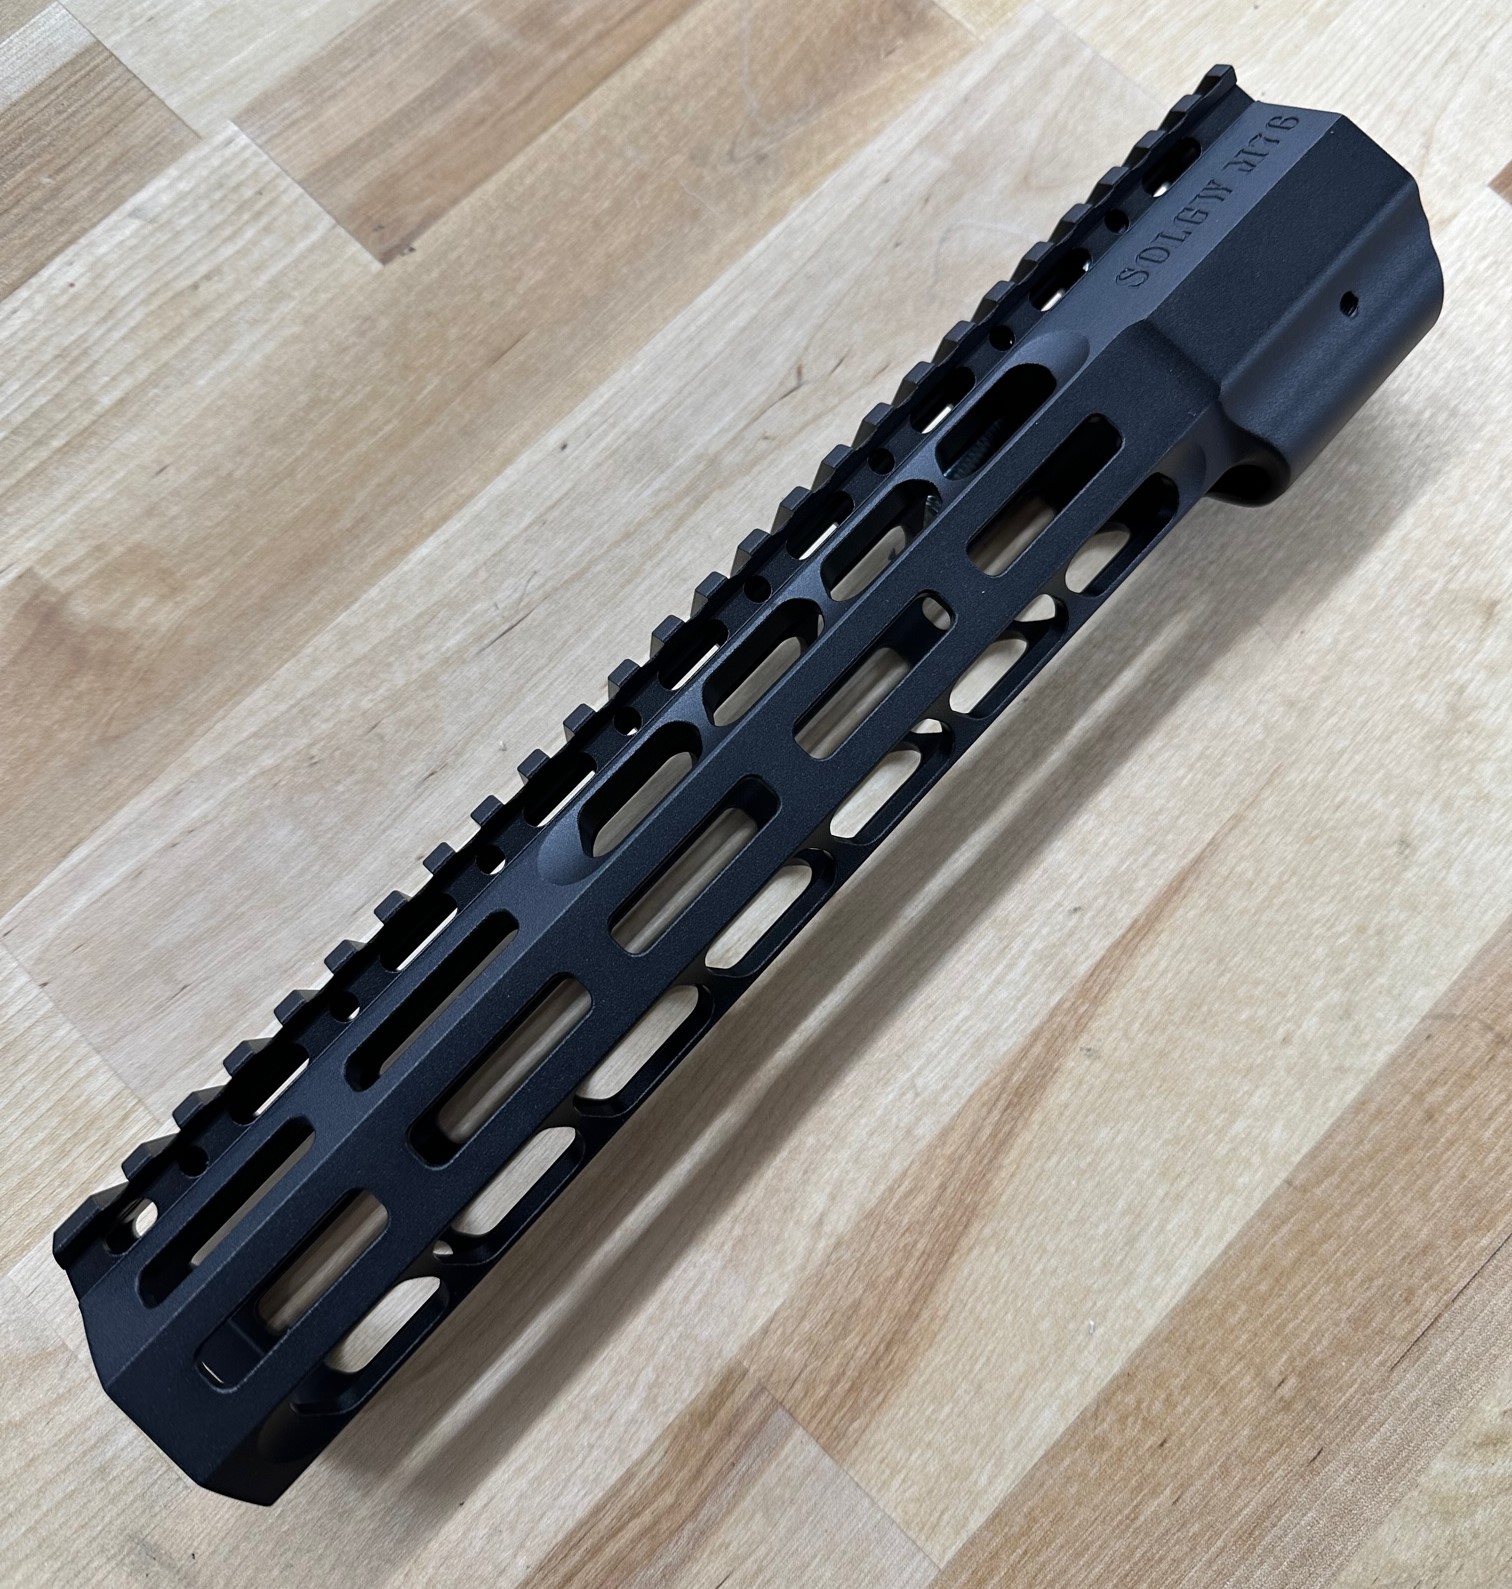 SOLGW M76 10.5 inch rail – JM Precision Arms